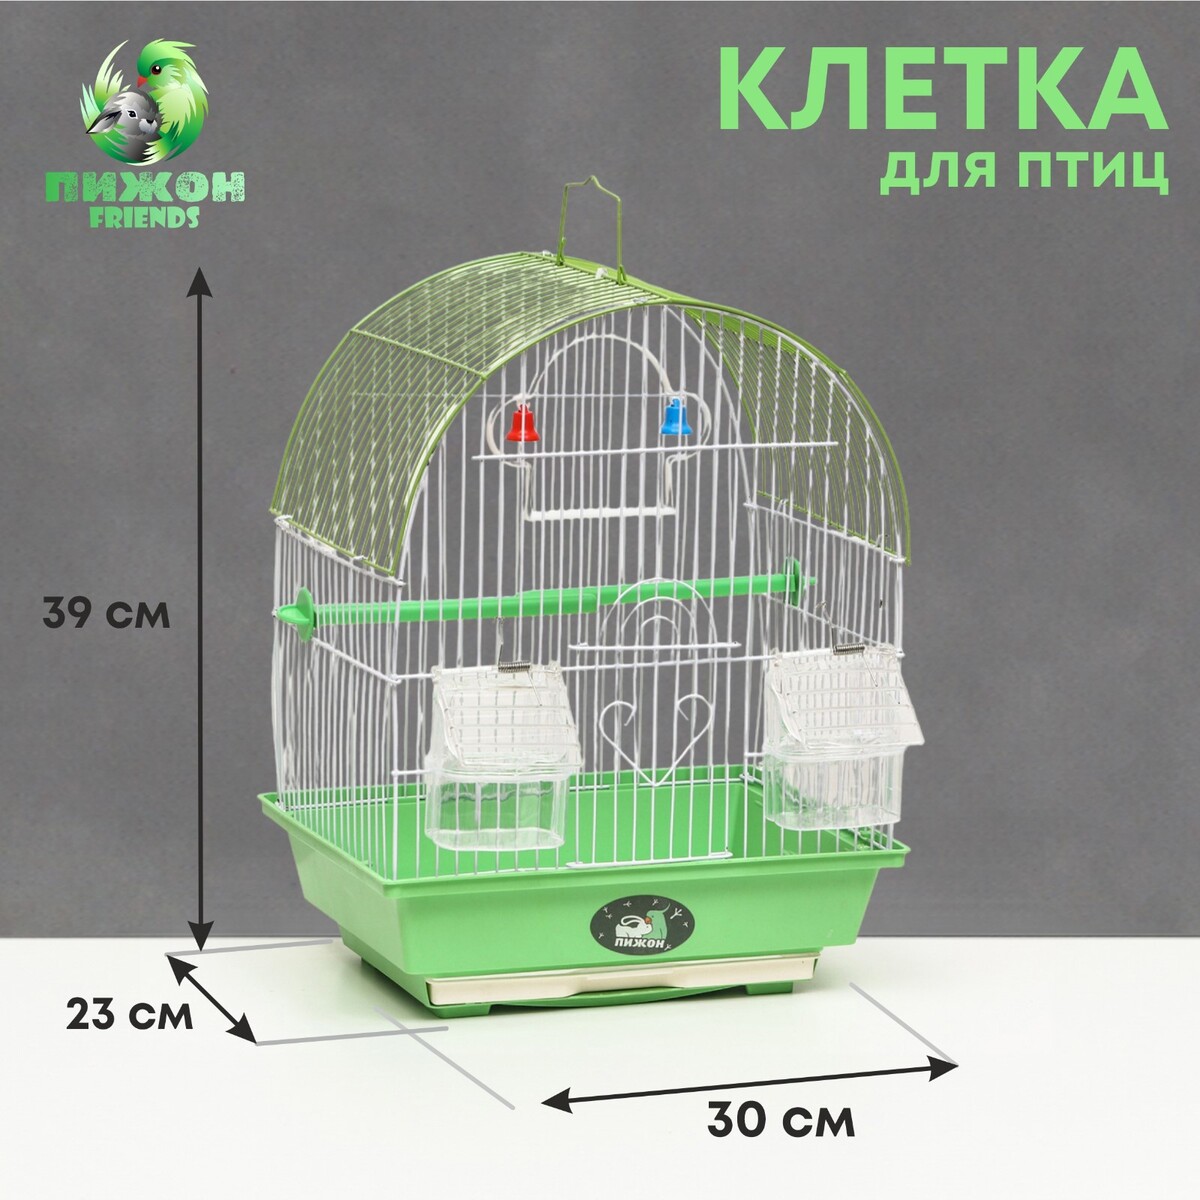 Клетка для птиц укомплектованная bd-1/3c, 30 х 23 х 39 см, зеленая Пижон